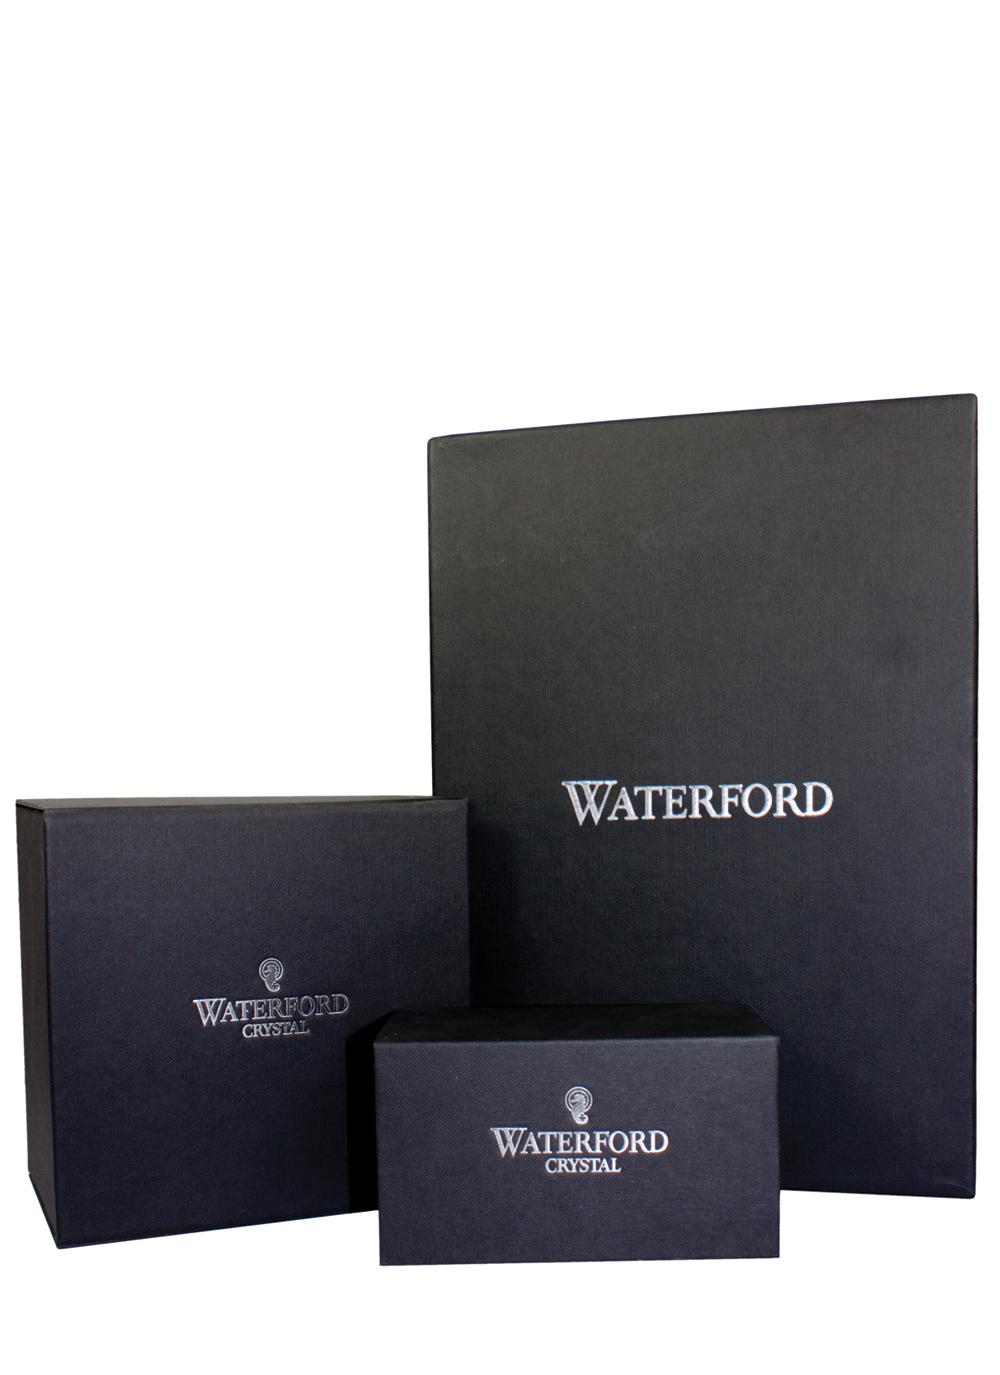 8x10 Waterford Wedding Heirloom Frame Clear